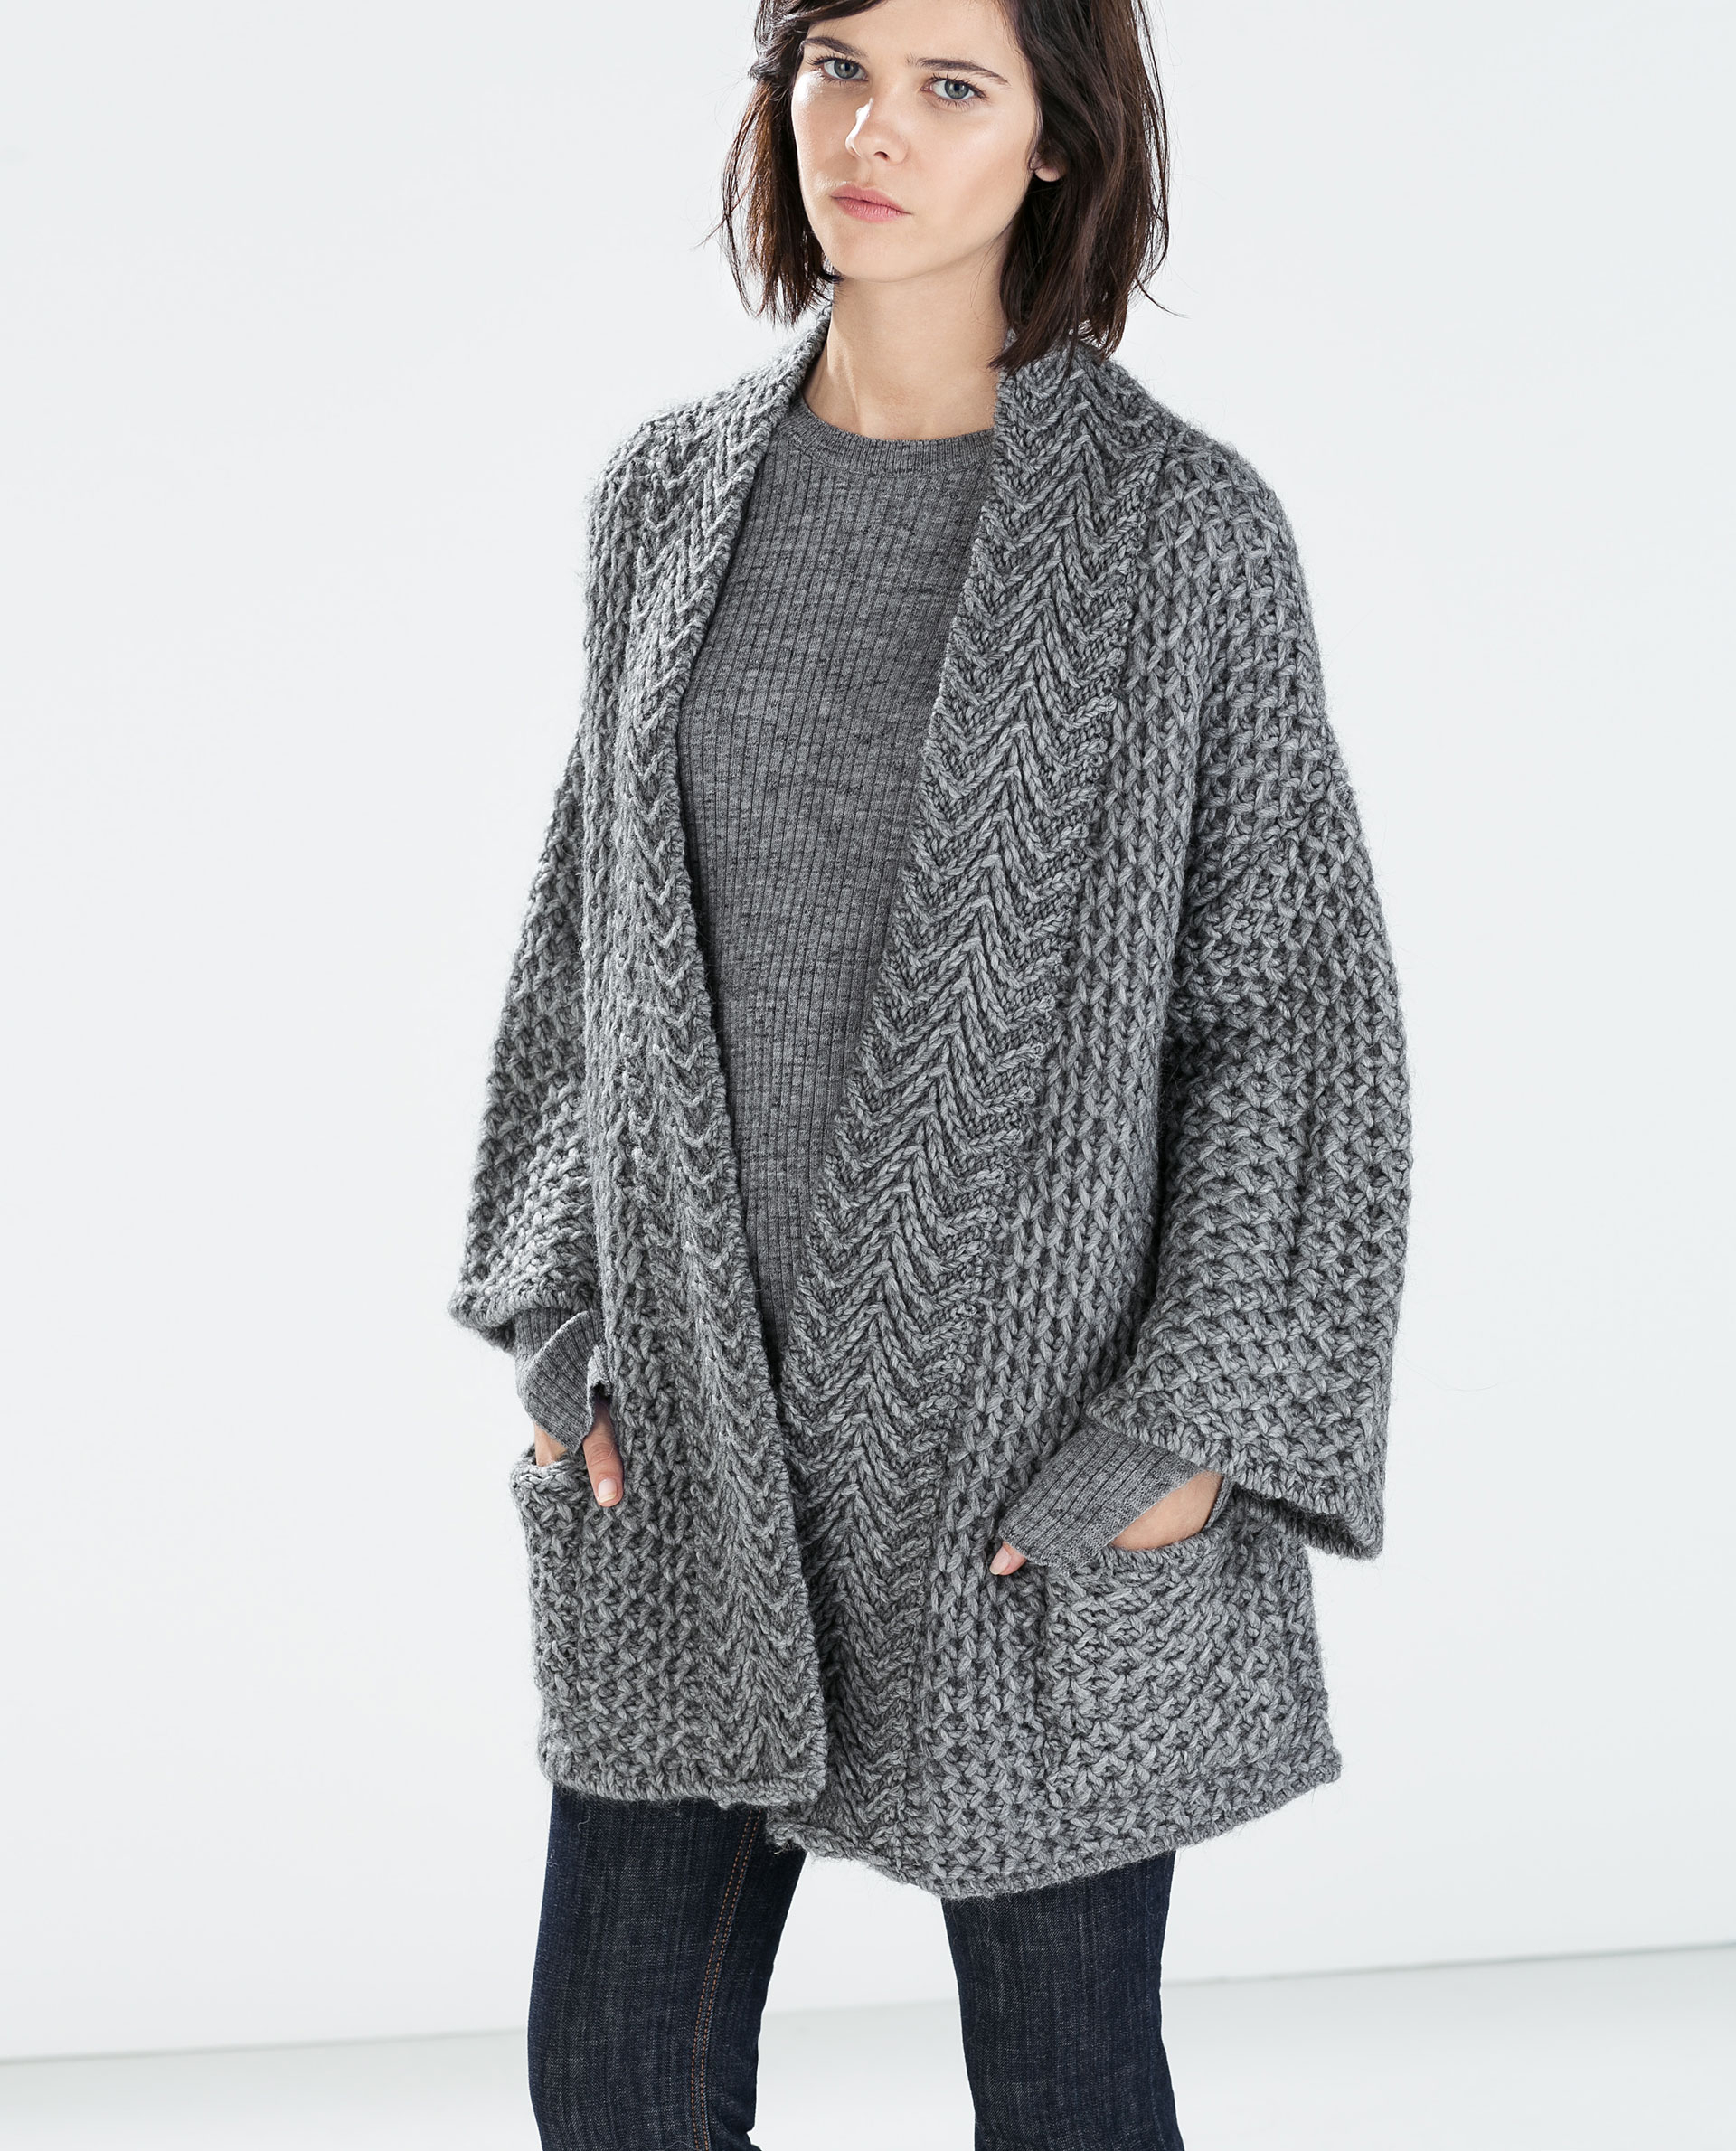 Zara Knit Cardigan With Pockets in Gray | Lyst